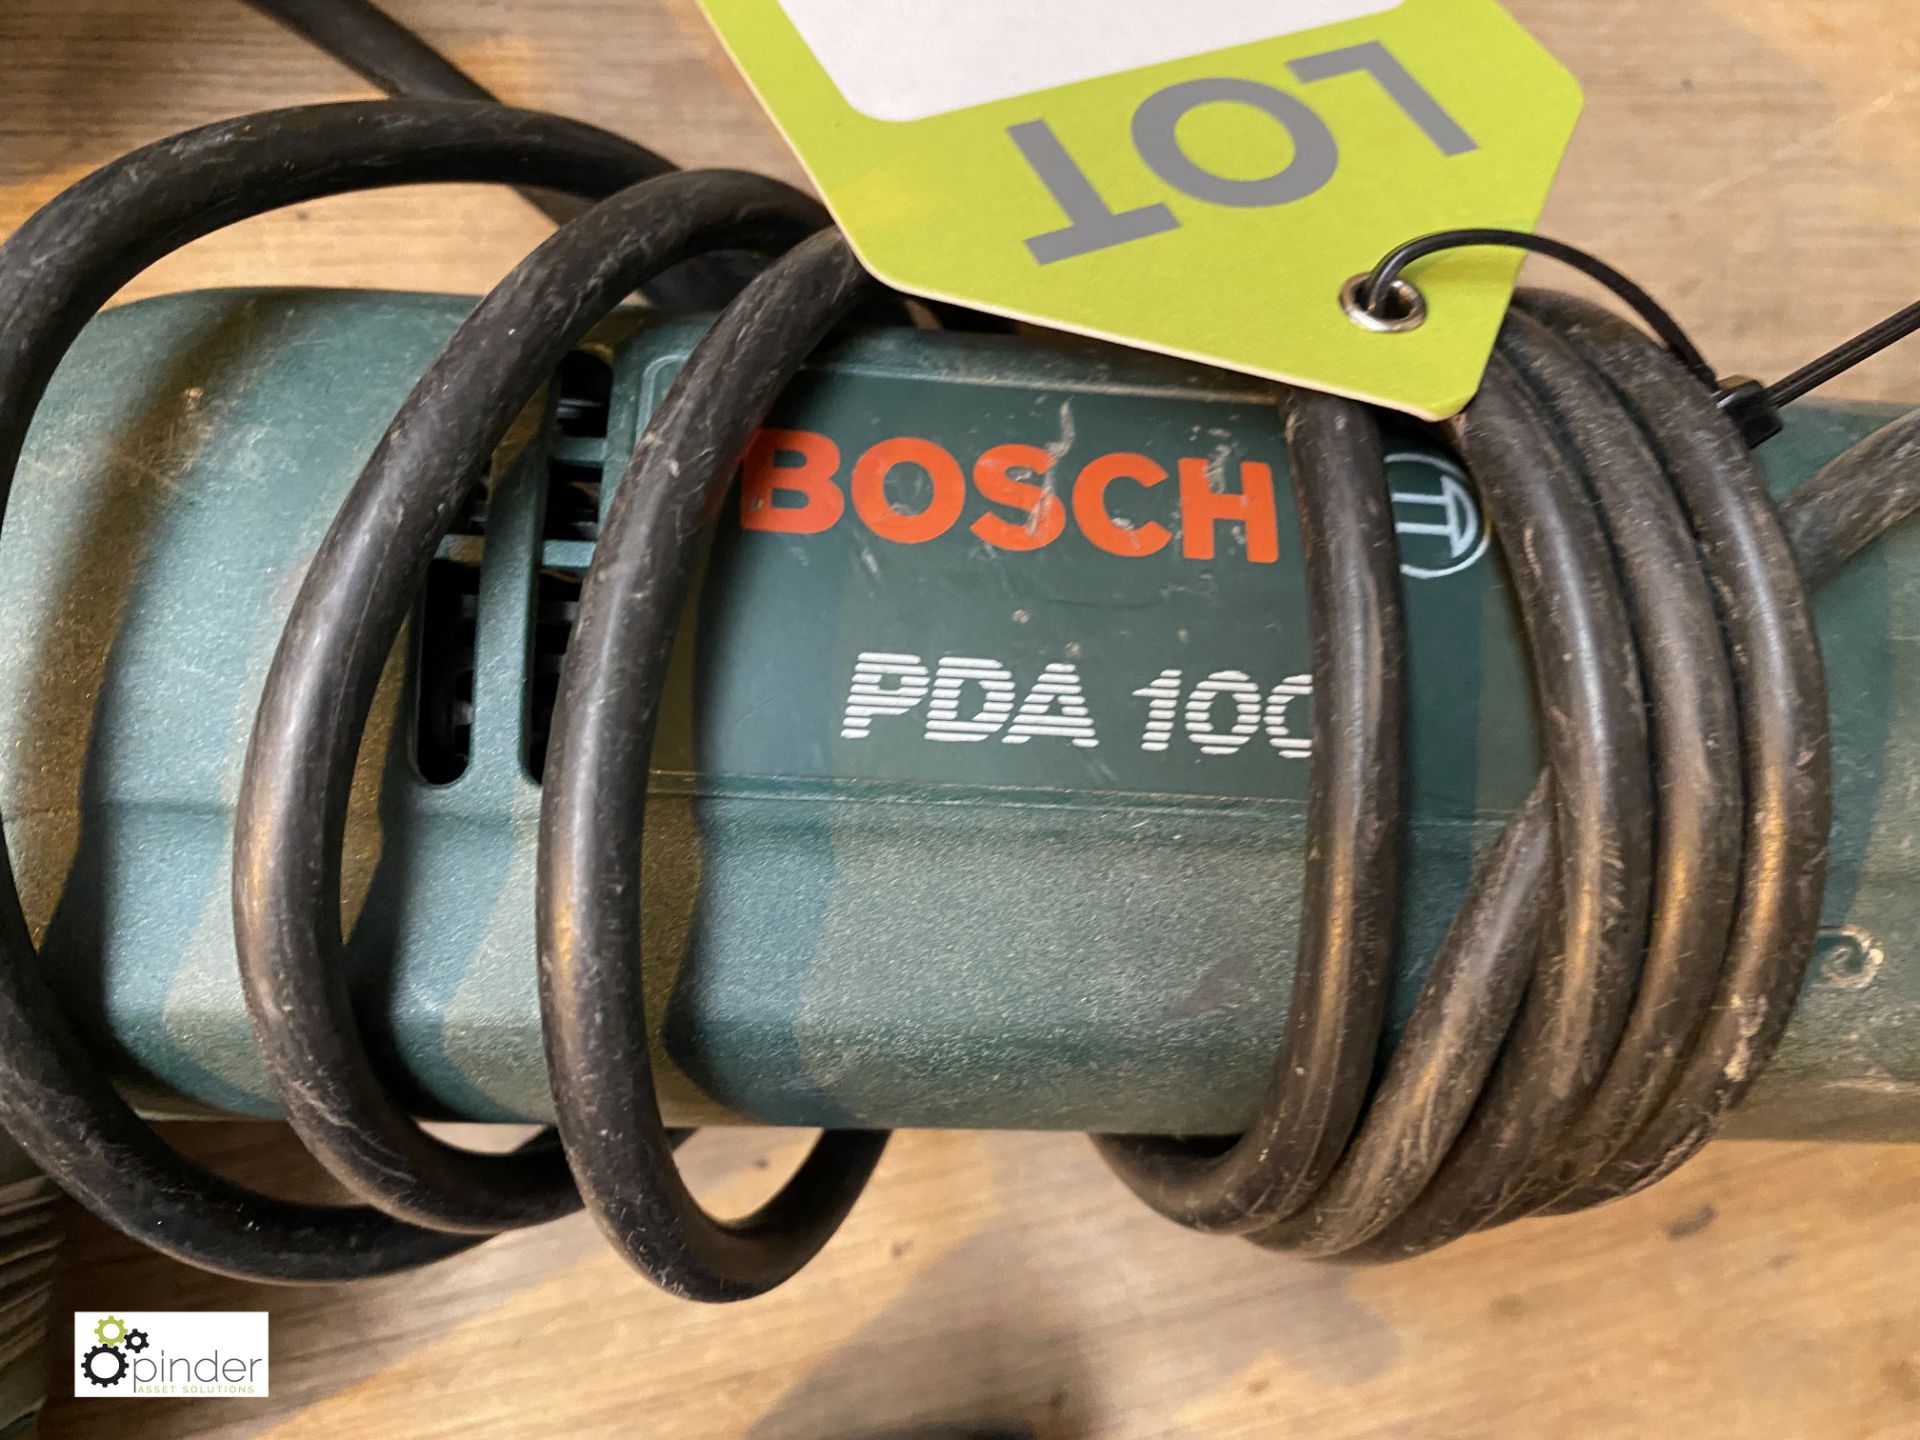 Bosch PDA 100 Precision Sander, 240volts - Image 2 of 3